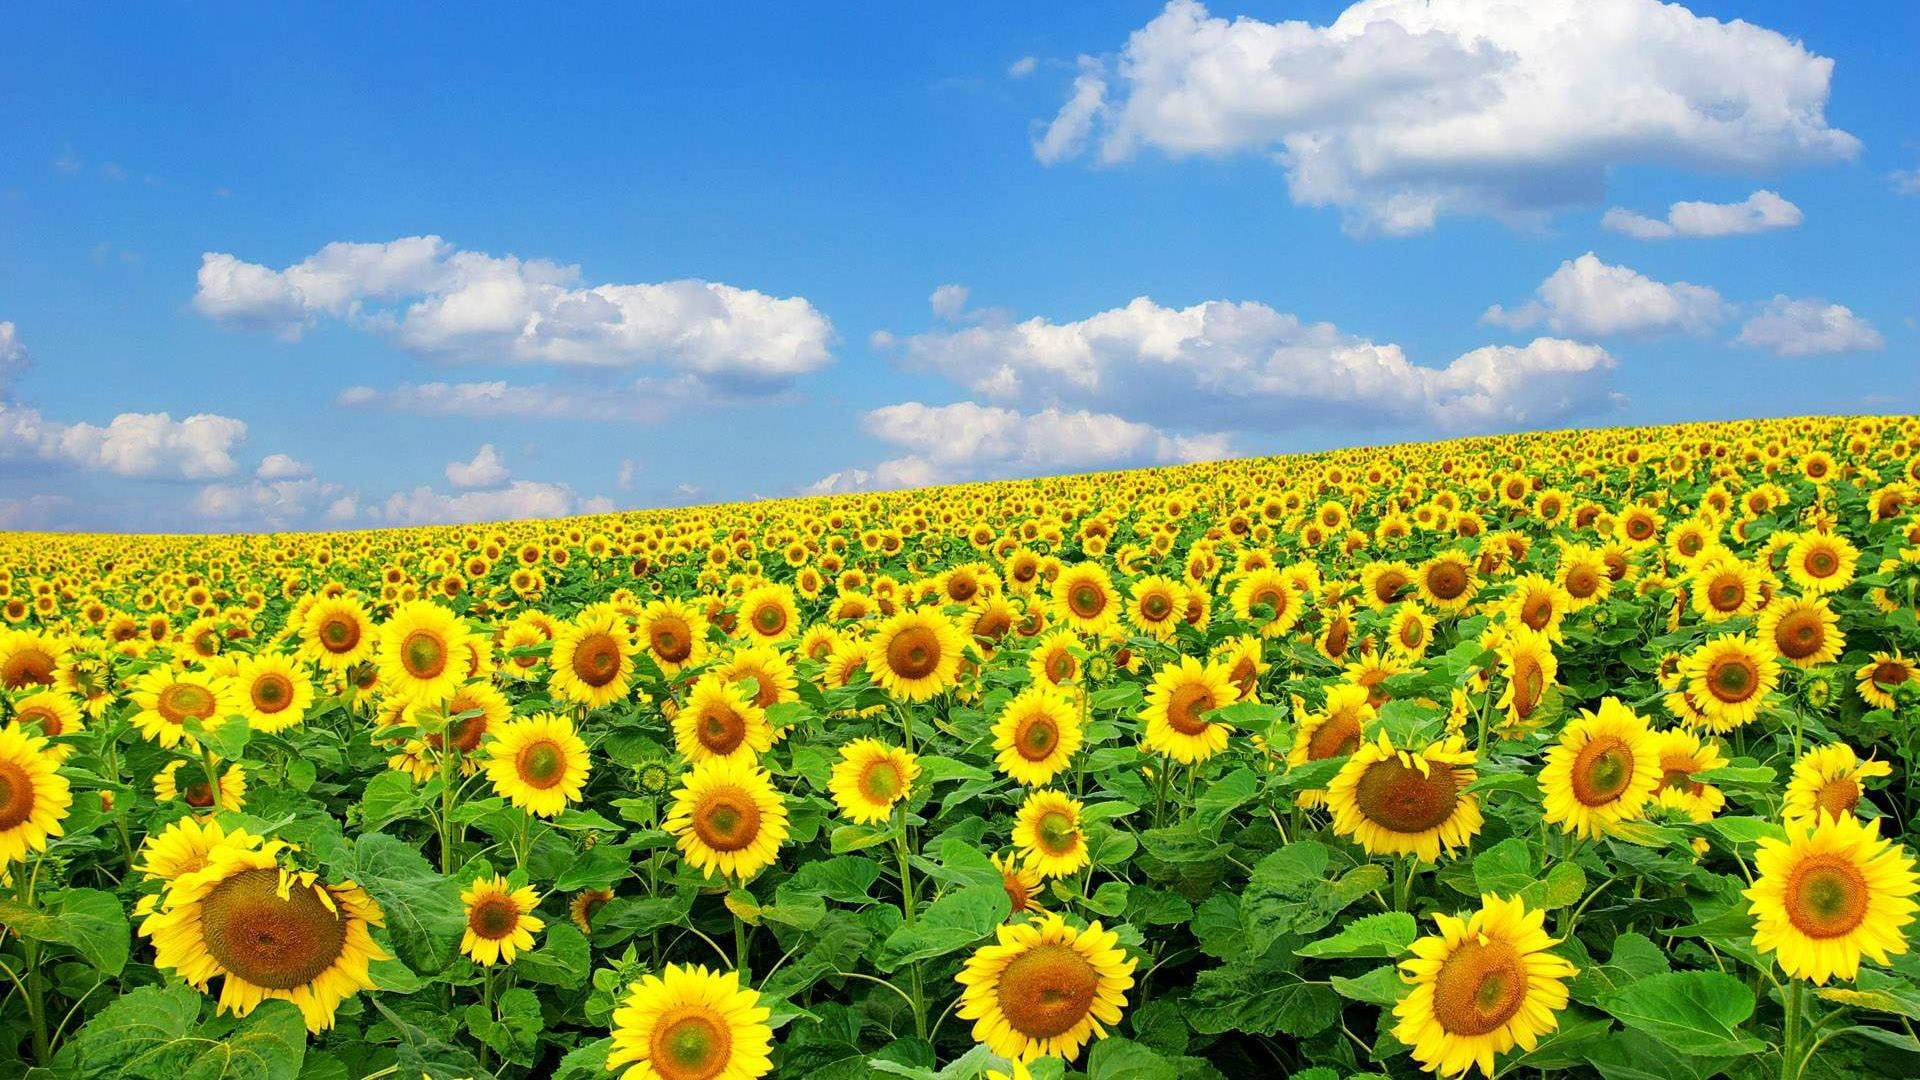 Sunflower Field In Spring Season Background